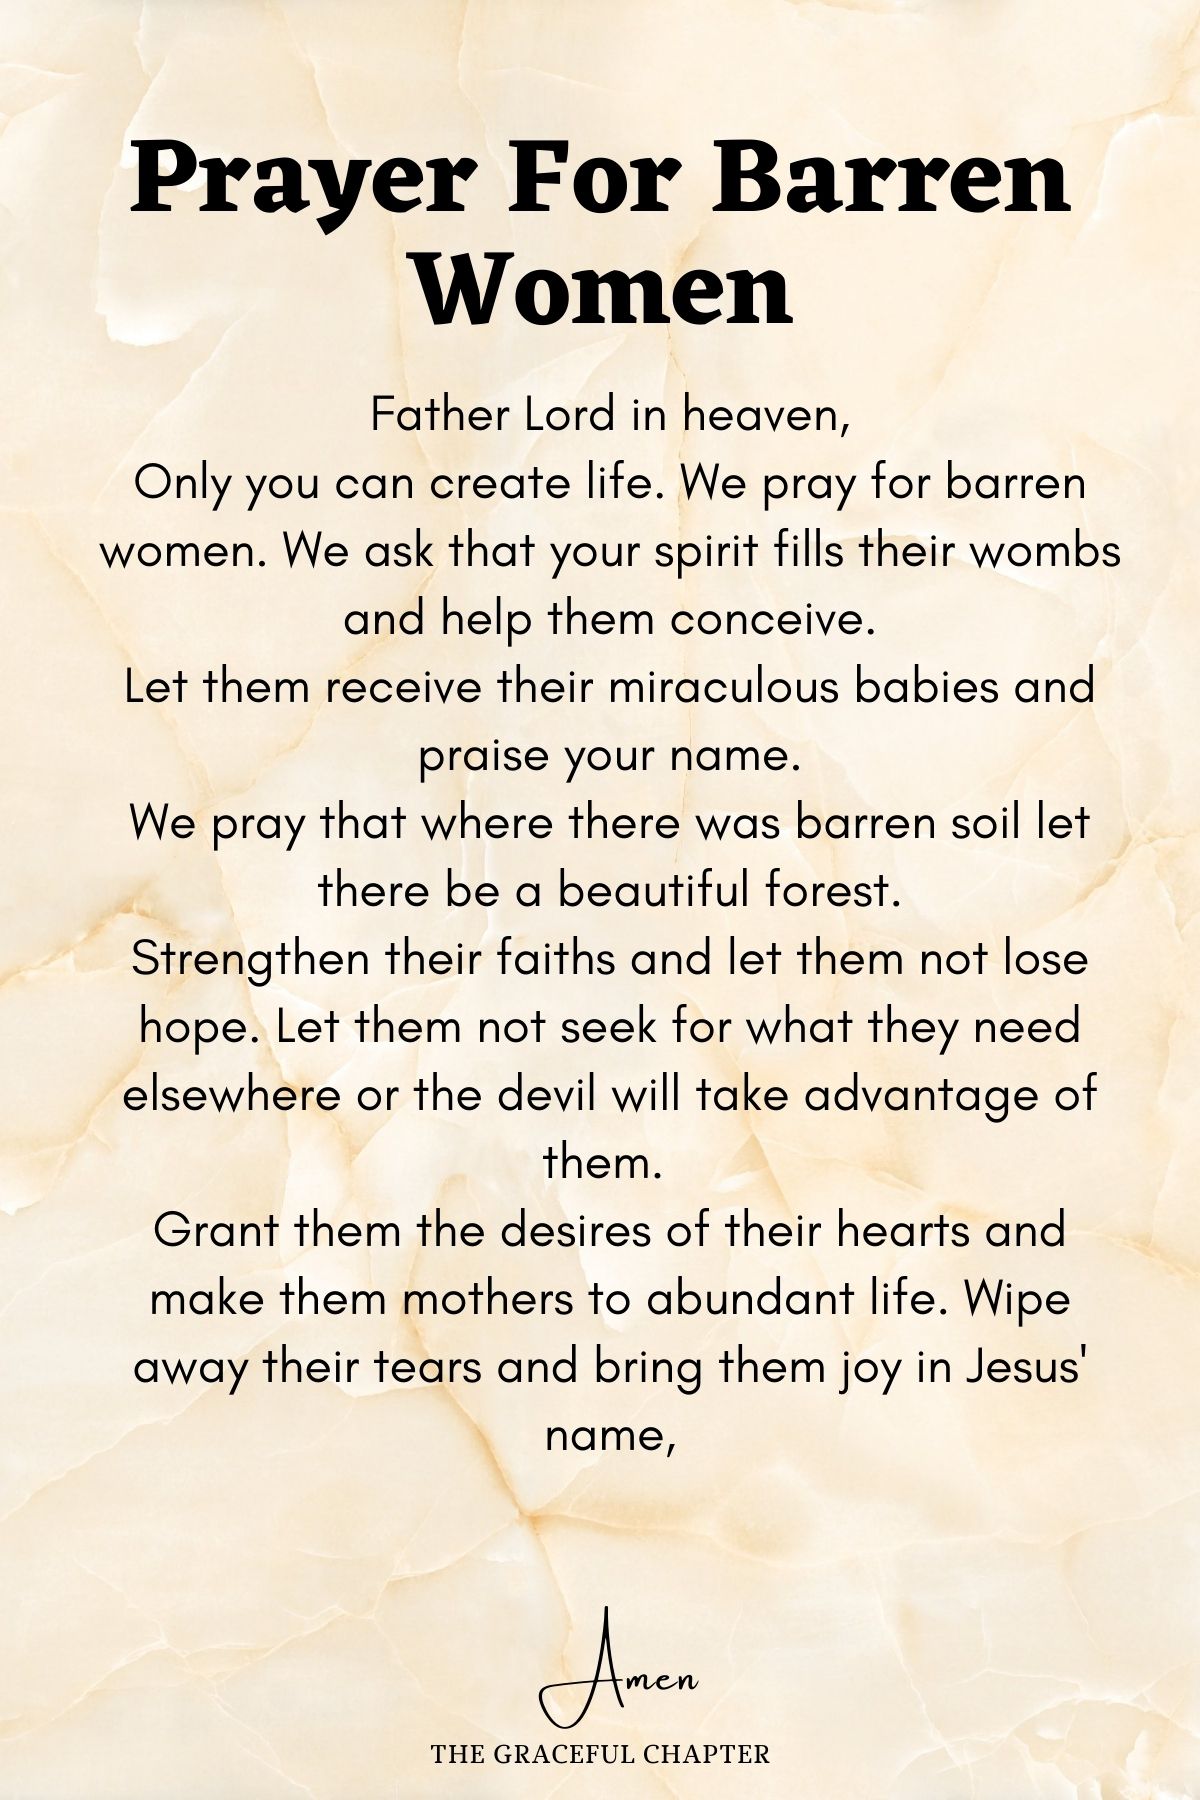 Prayer for barren women